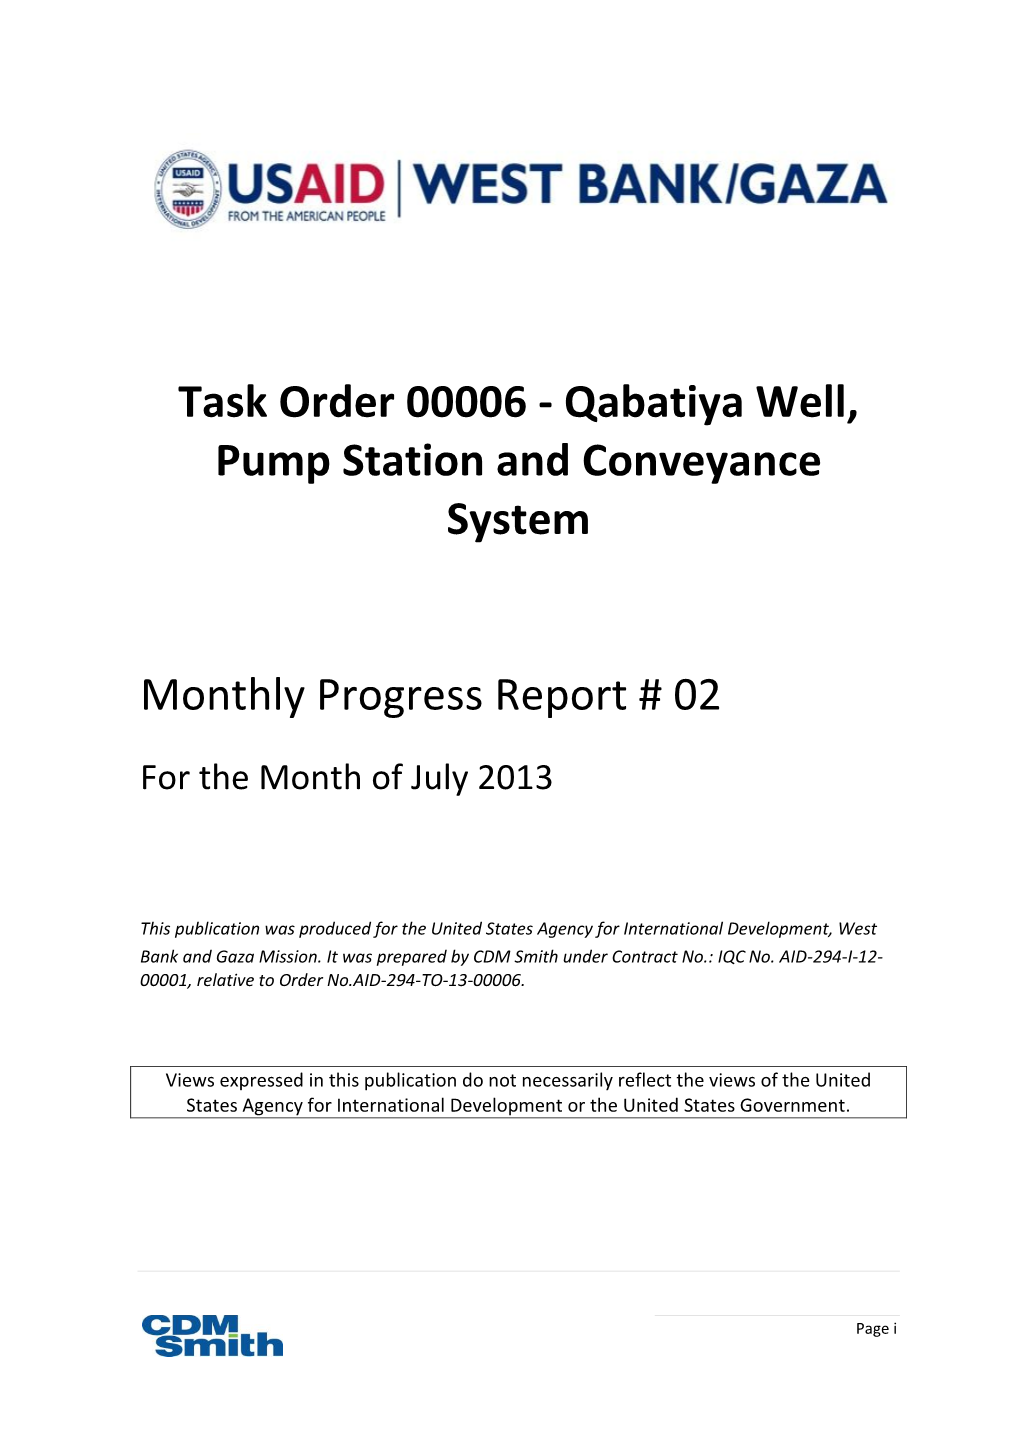 Task Order 00006 - Qabatiya Well, Pump Station and Conveyance System